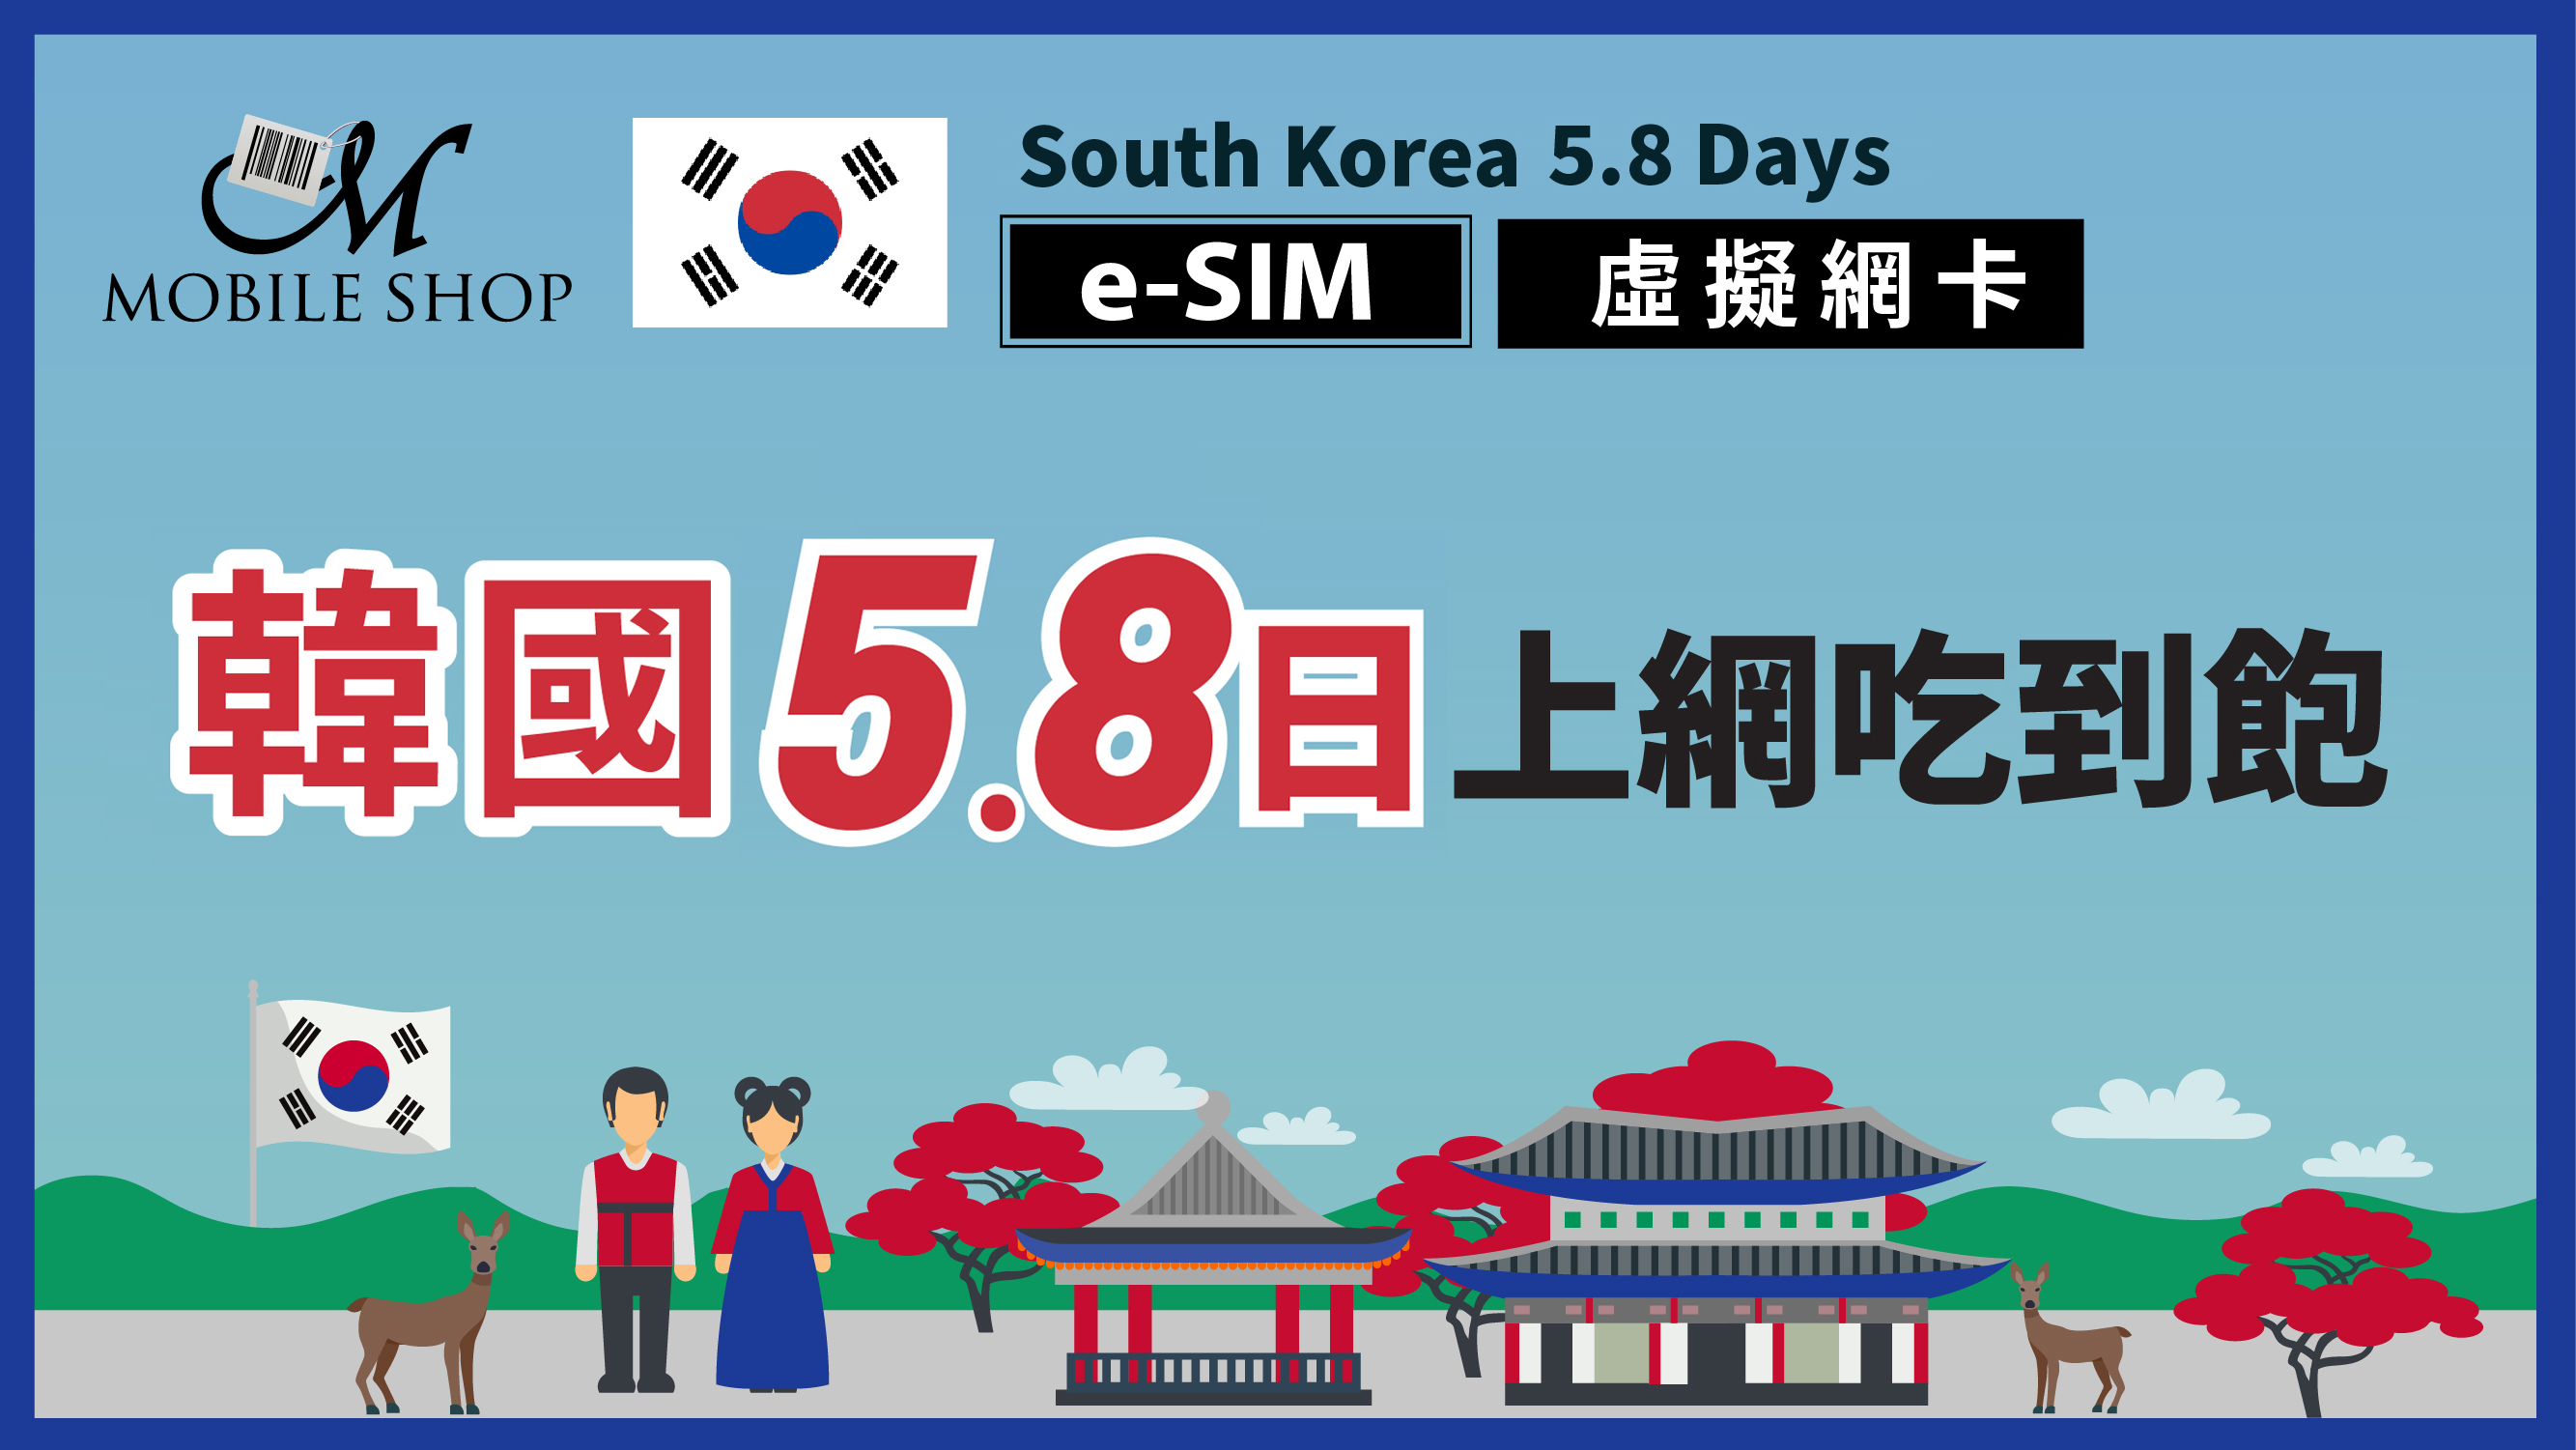 ESIM Korea 5.8 days unlimited data